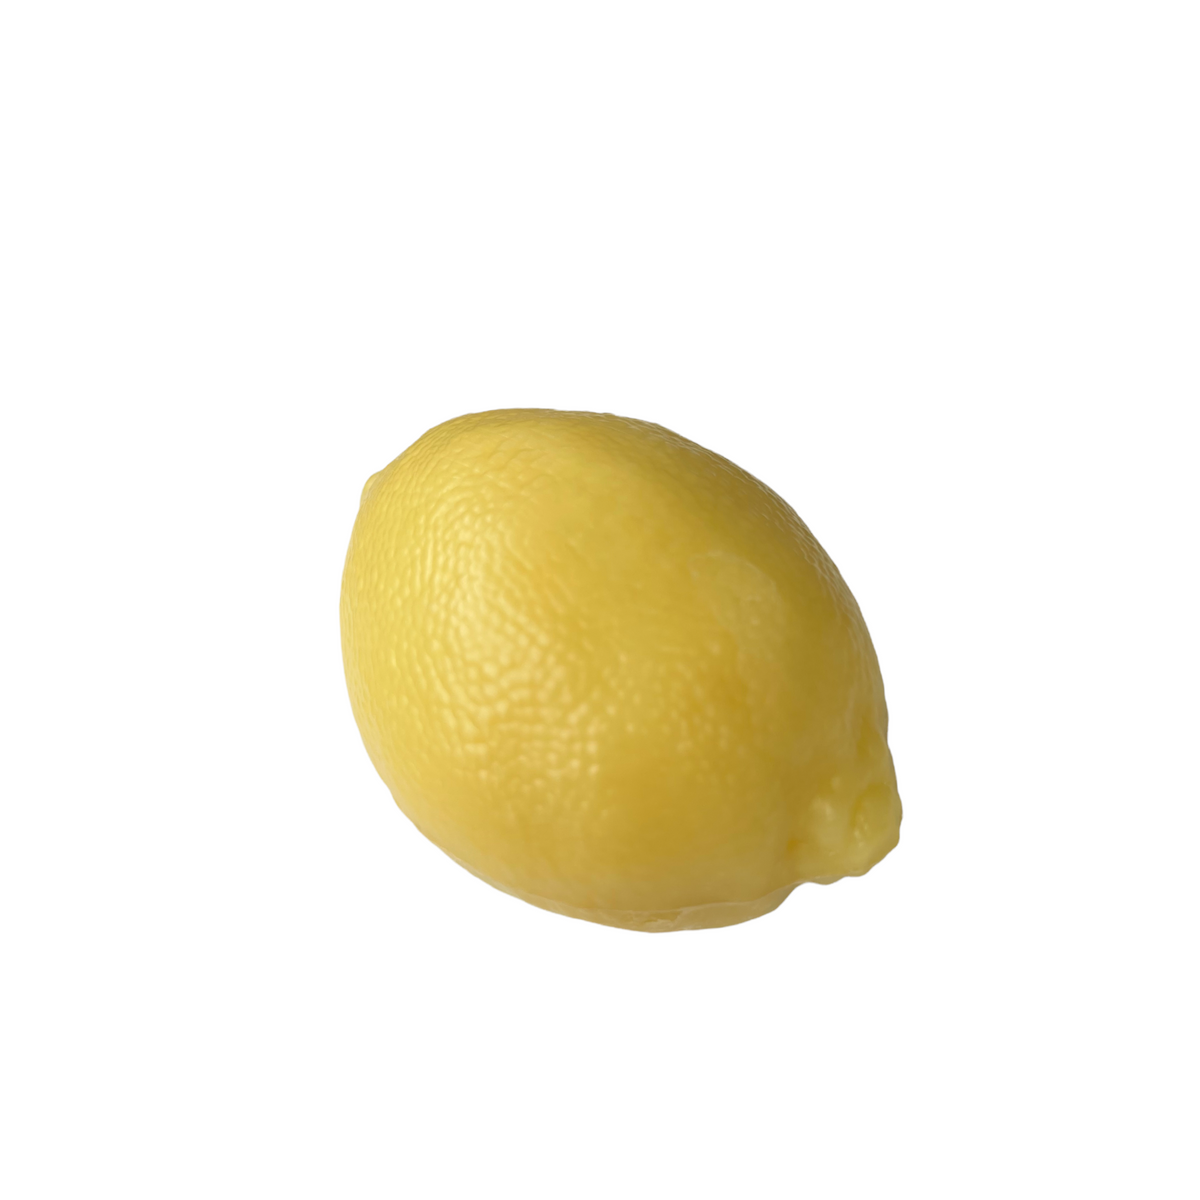 125g Lemon / Citron Shape French Soap Bar